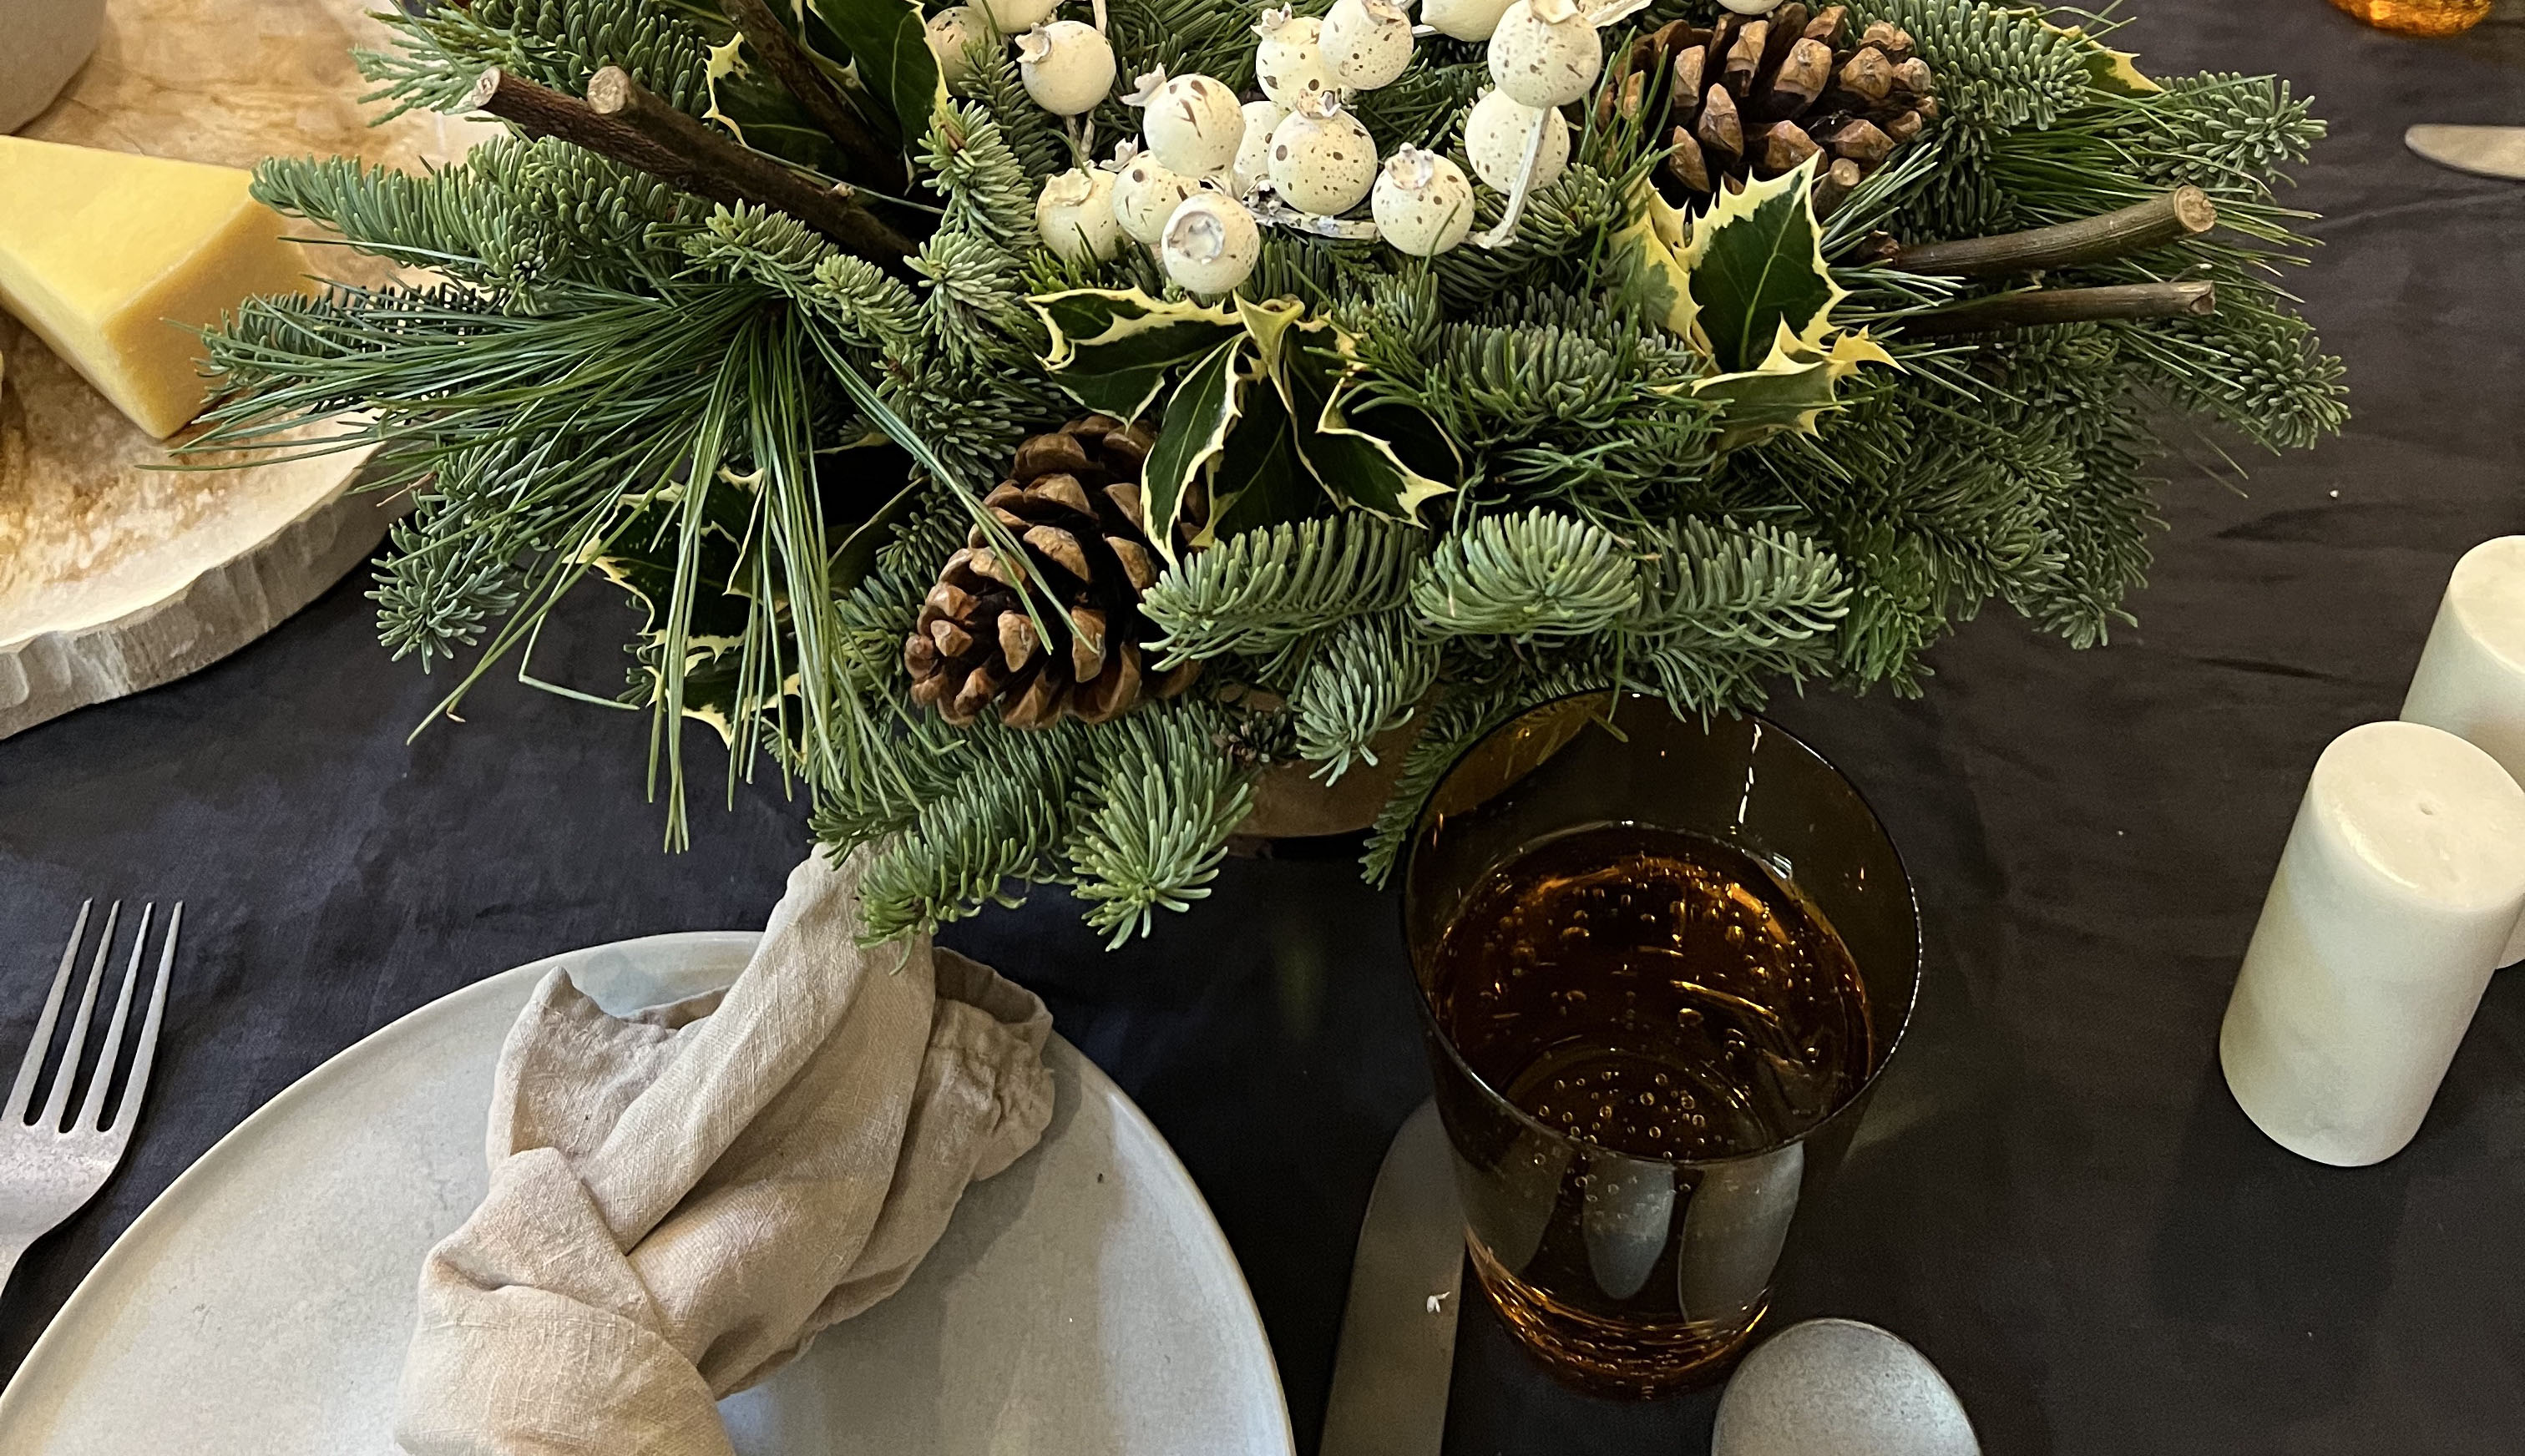 Table set for Christmas with Christmas flowers